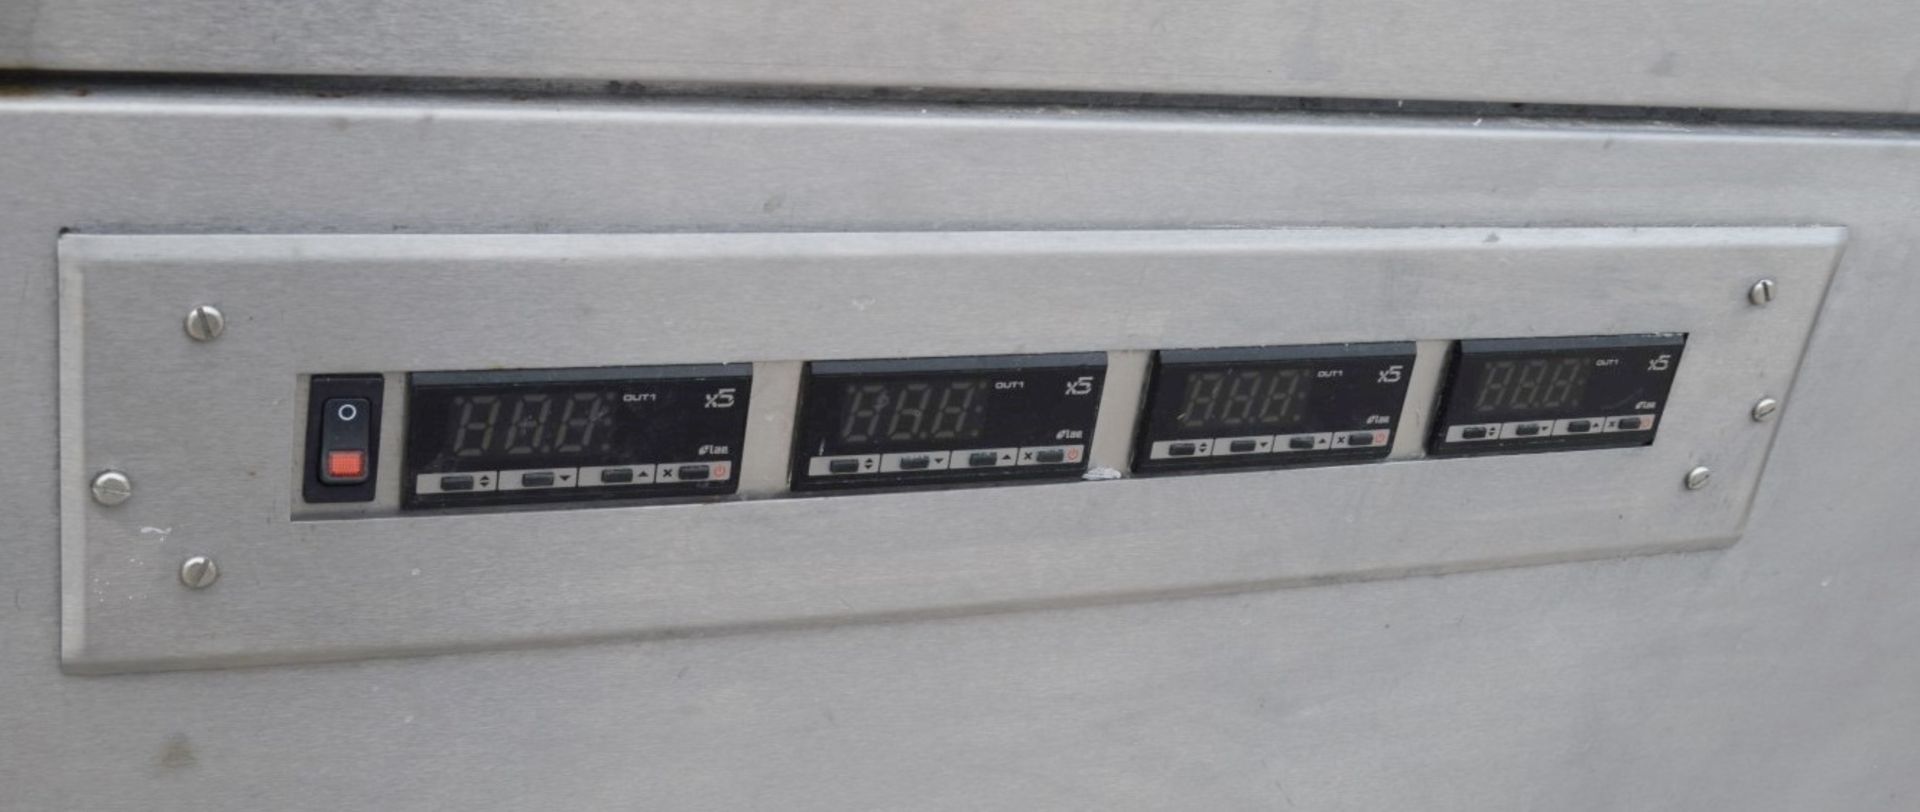 1 x Heated Multideck Display Unit With Illuminated 'HOT' Signage On The Front - Image 8 of 13